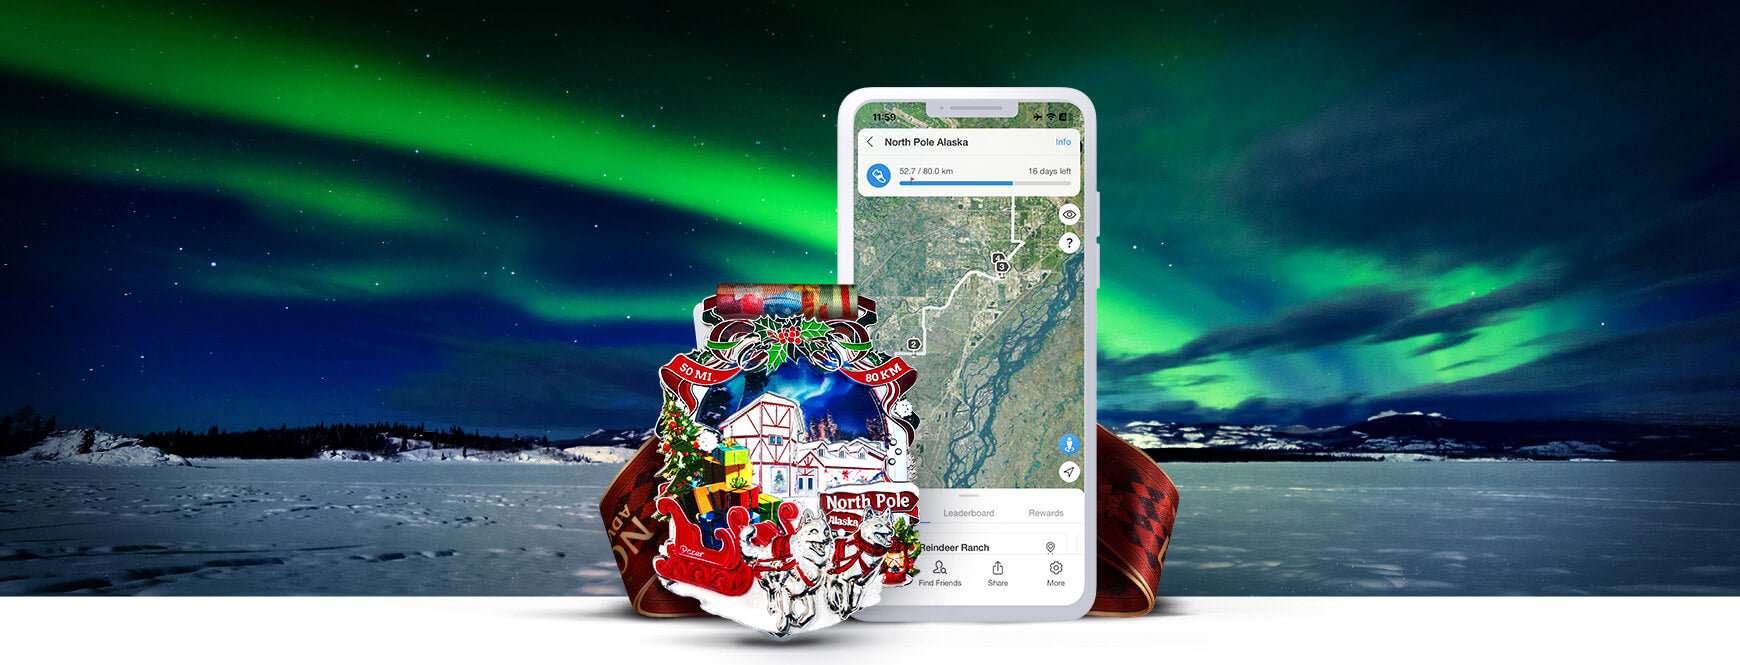 North Pole Alaska Virtual Challenge